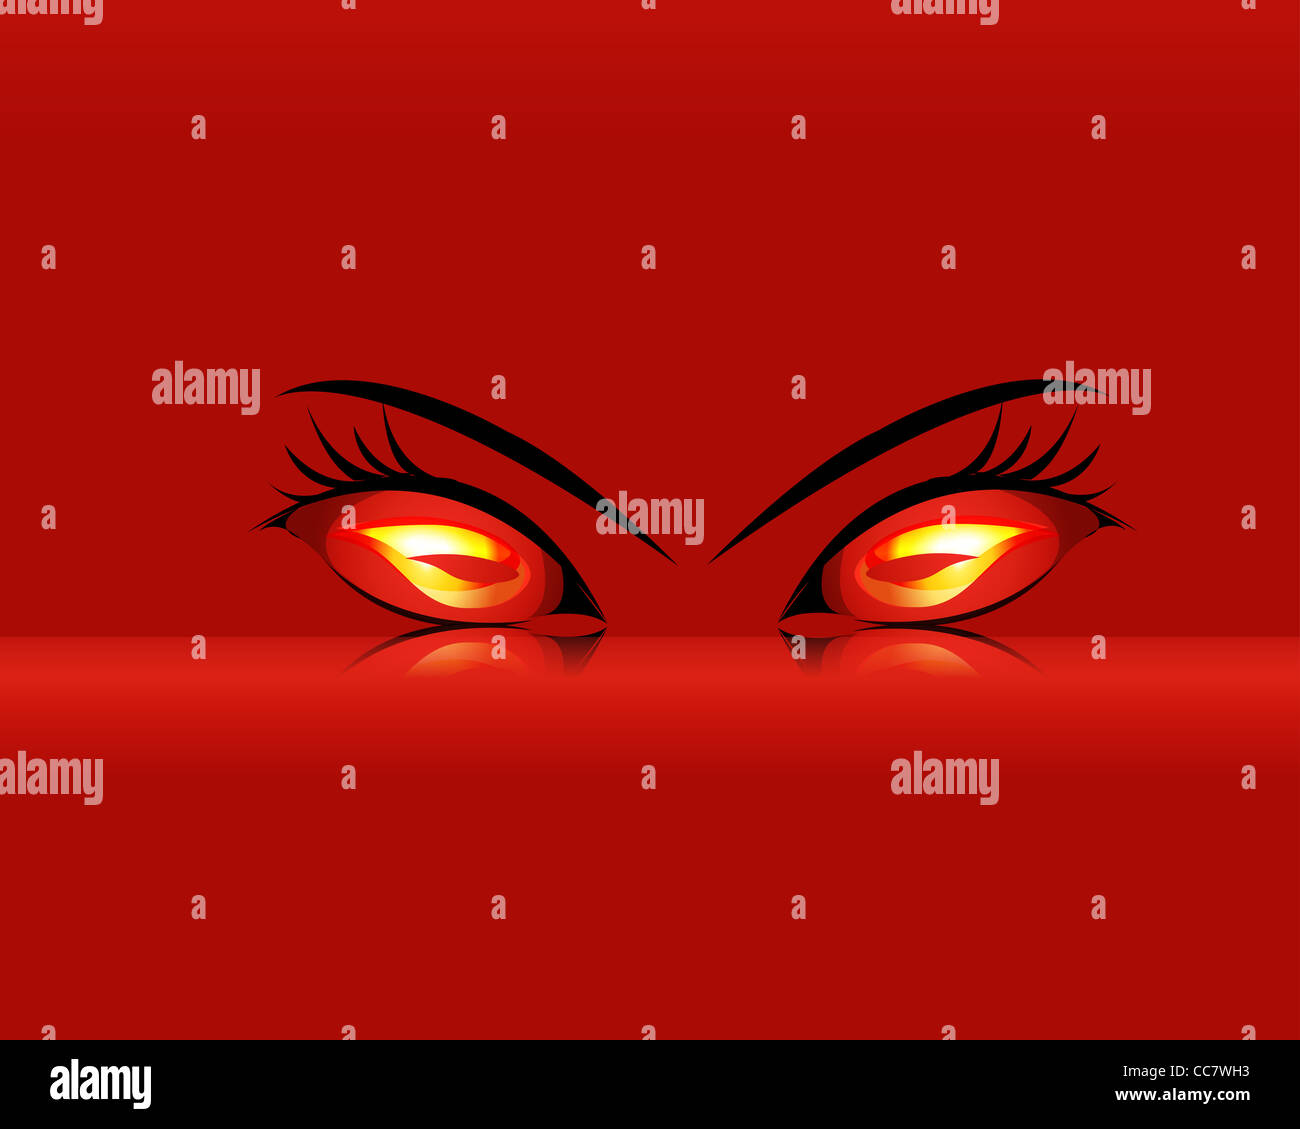 Cartoon inflammatory Evil eyes Stock Photo